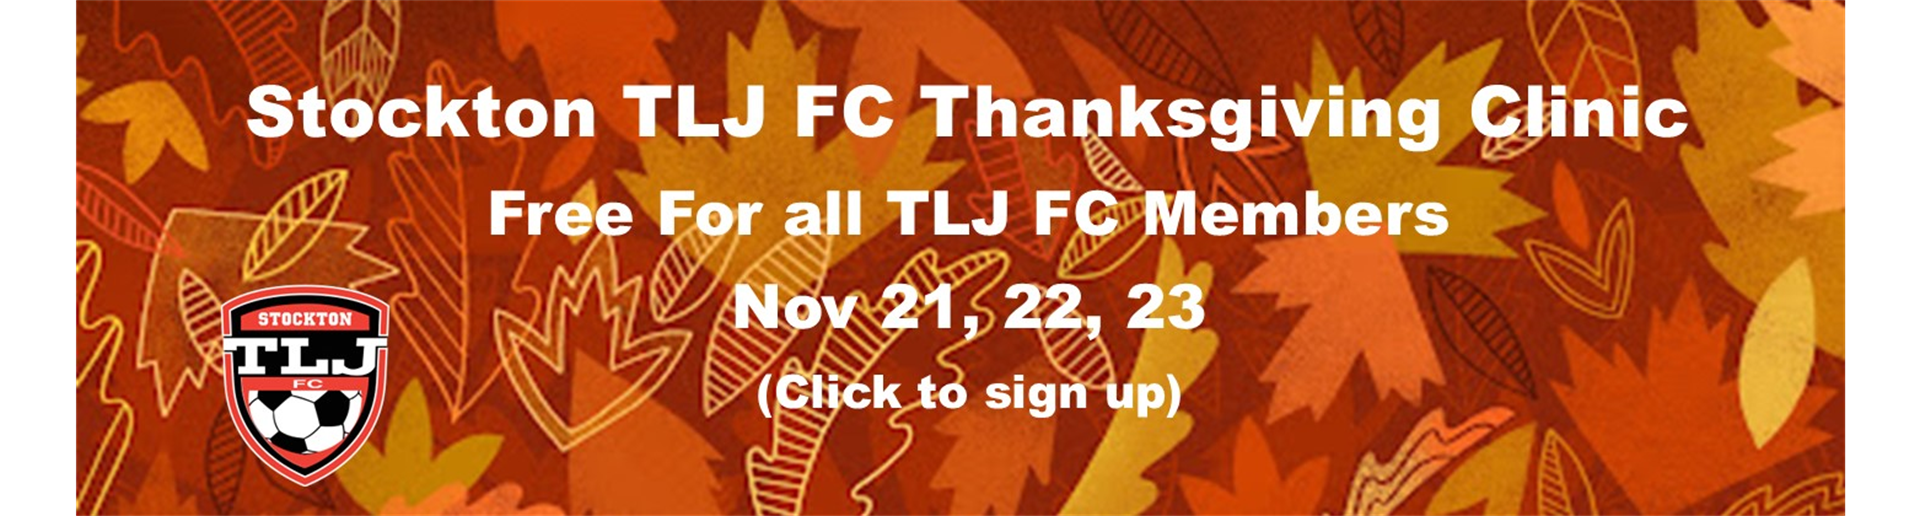 Stockton TLJ FC Thanksgiving Clinic